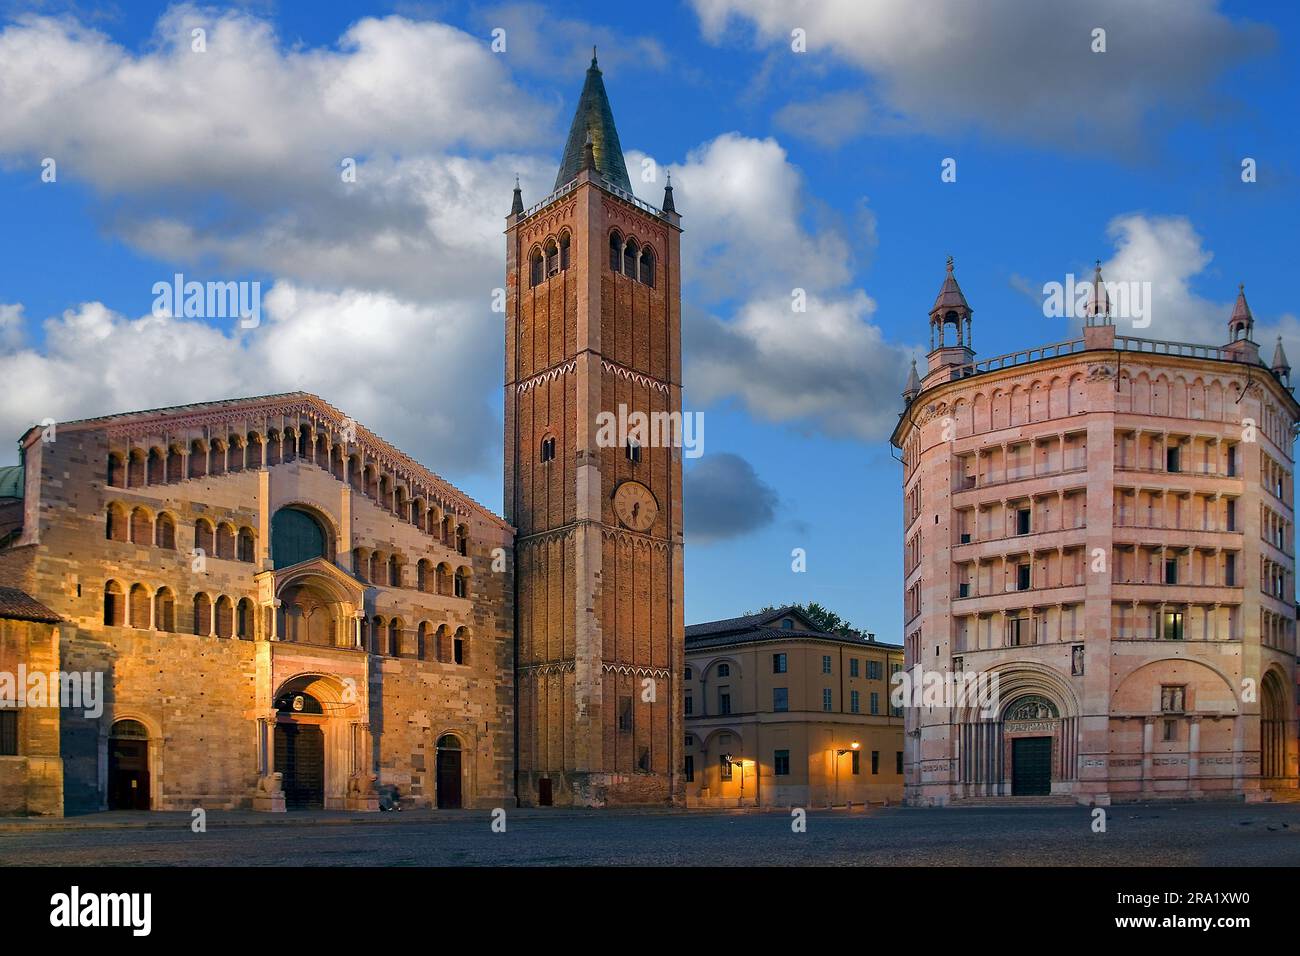 Piazza Duomo mit der Kathedrale, dem Baptisterium und dem Palazzo Vescovile, Italien, Emilia-Romagna, Parma Stockfoto